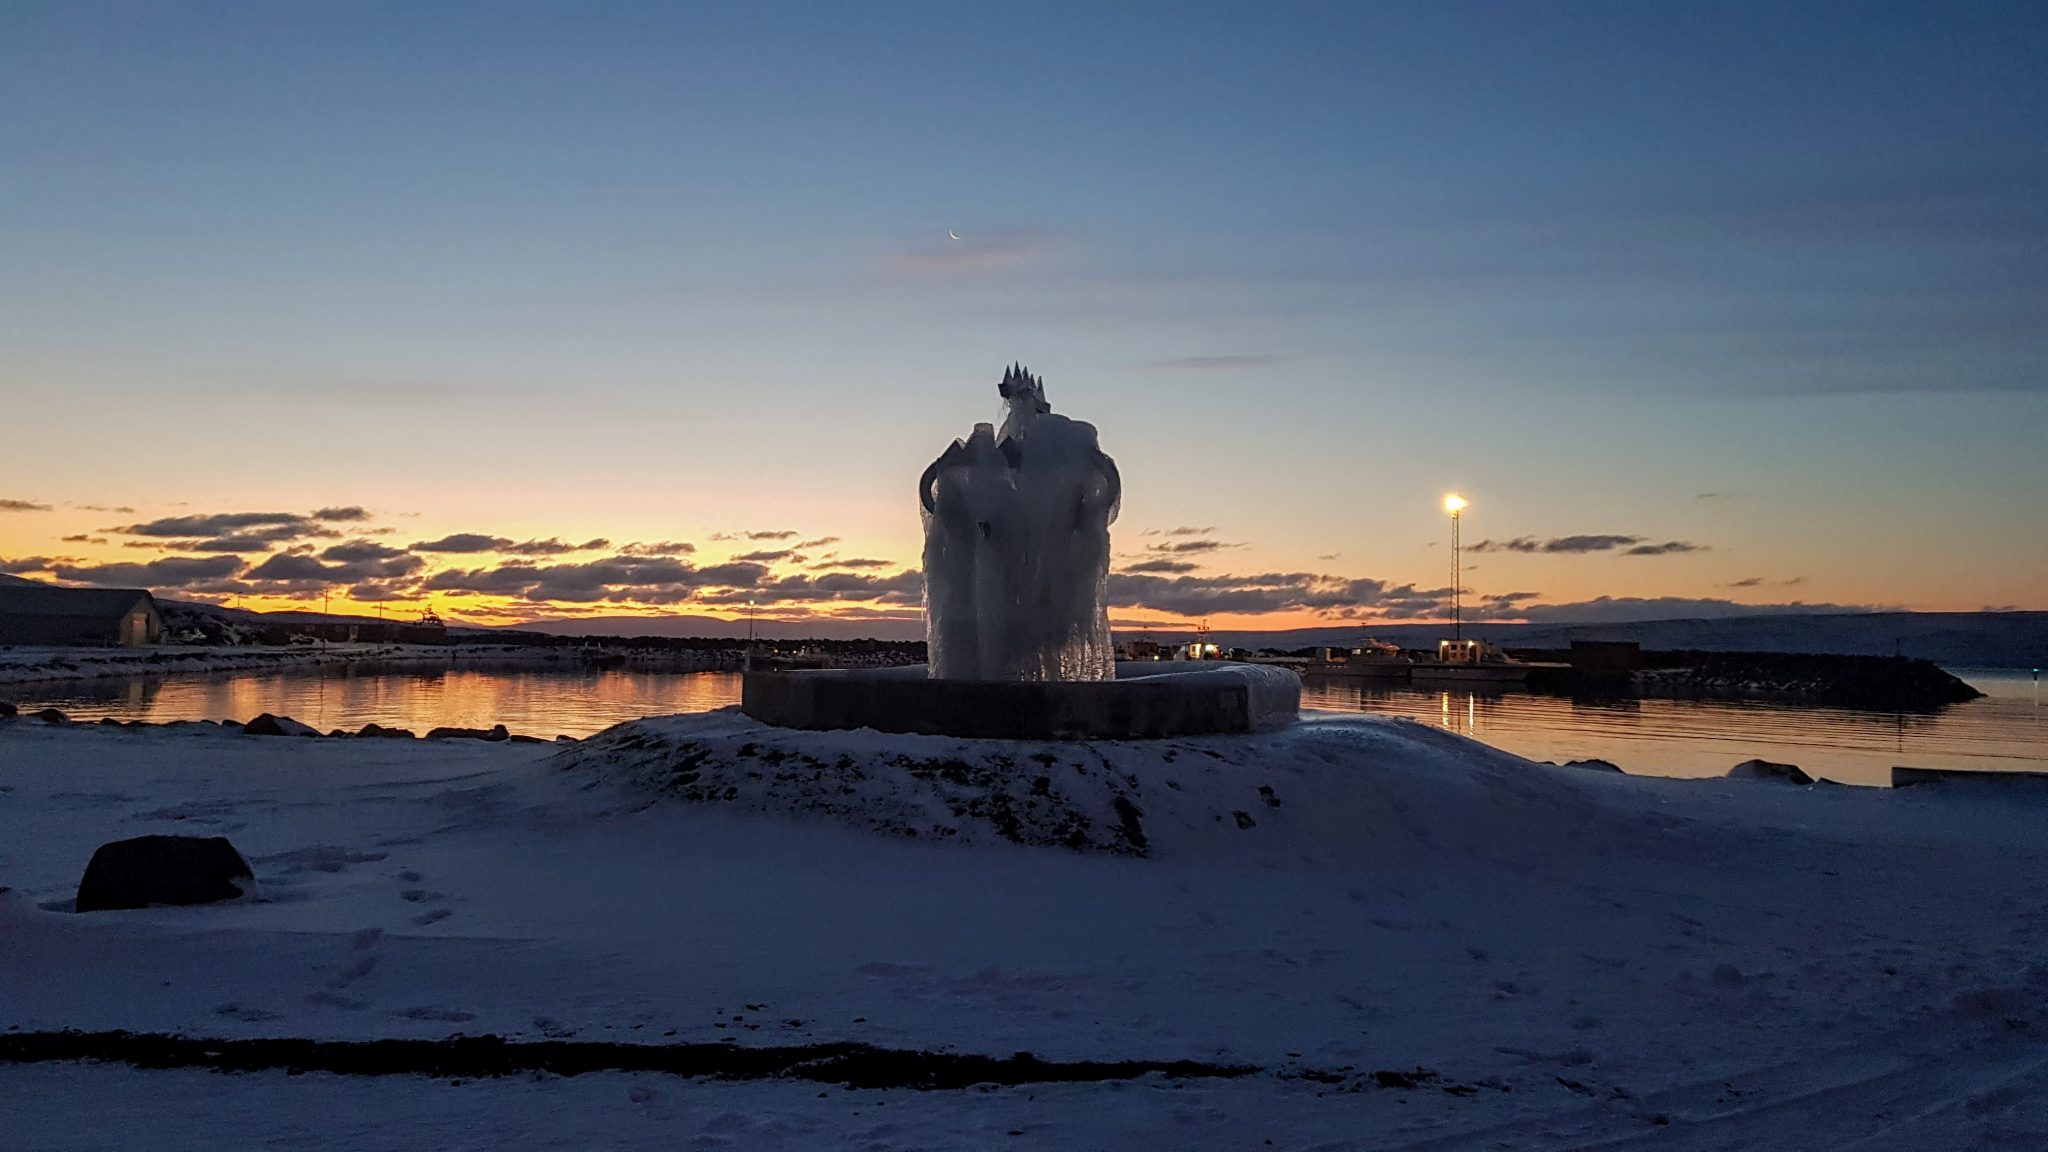 Sculpture and Sunset in Holmavik